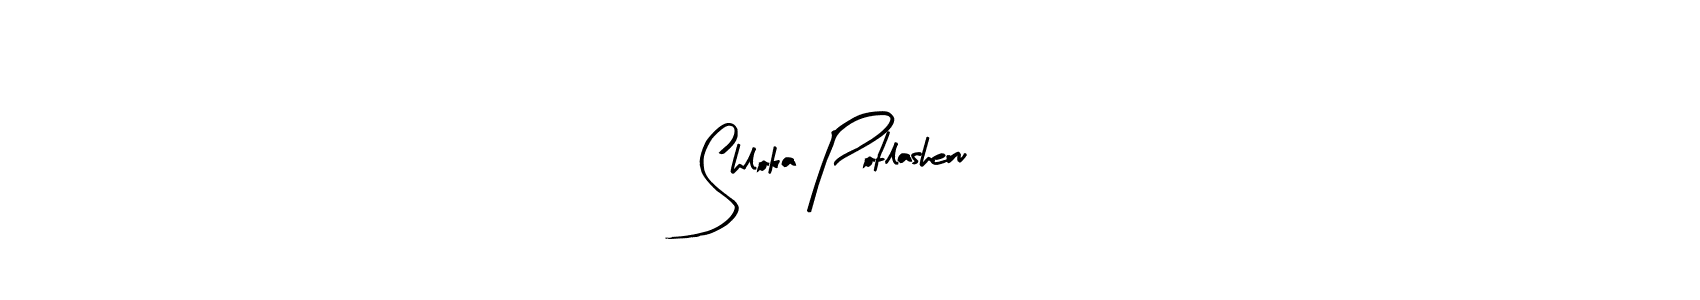 How to make Shloka Potlasheru signature? Arty Signature is a professional autograph style. Create handwritten signature for Shloka Potlasheru name. Shloka Potlasheru signature style 8 images and pictures png